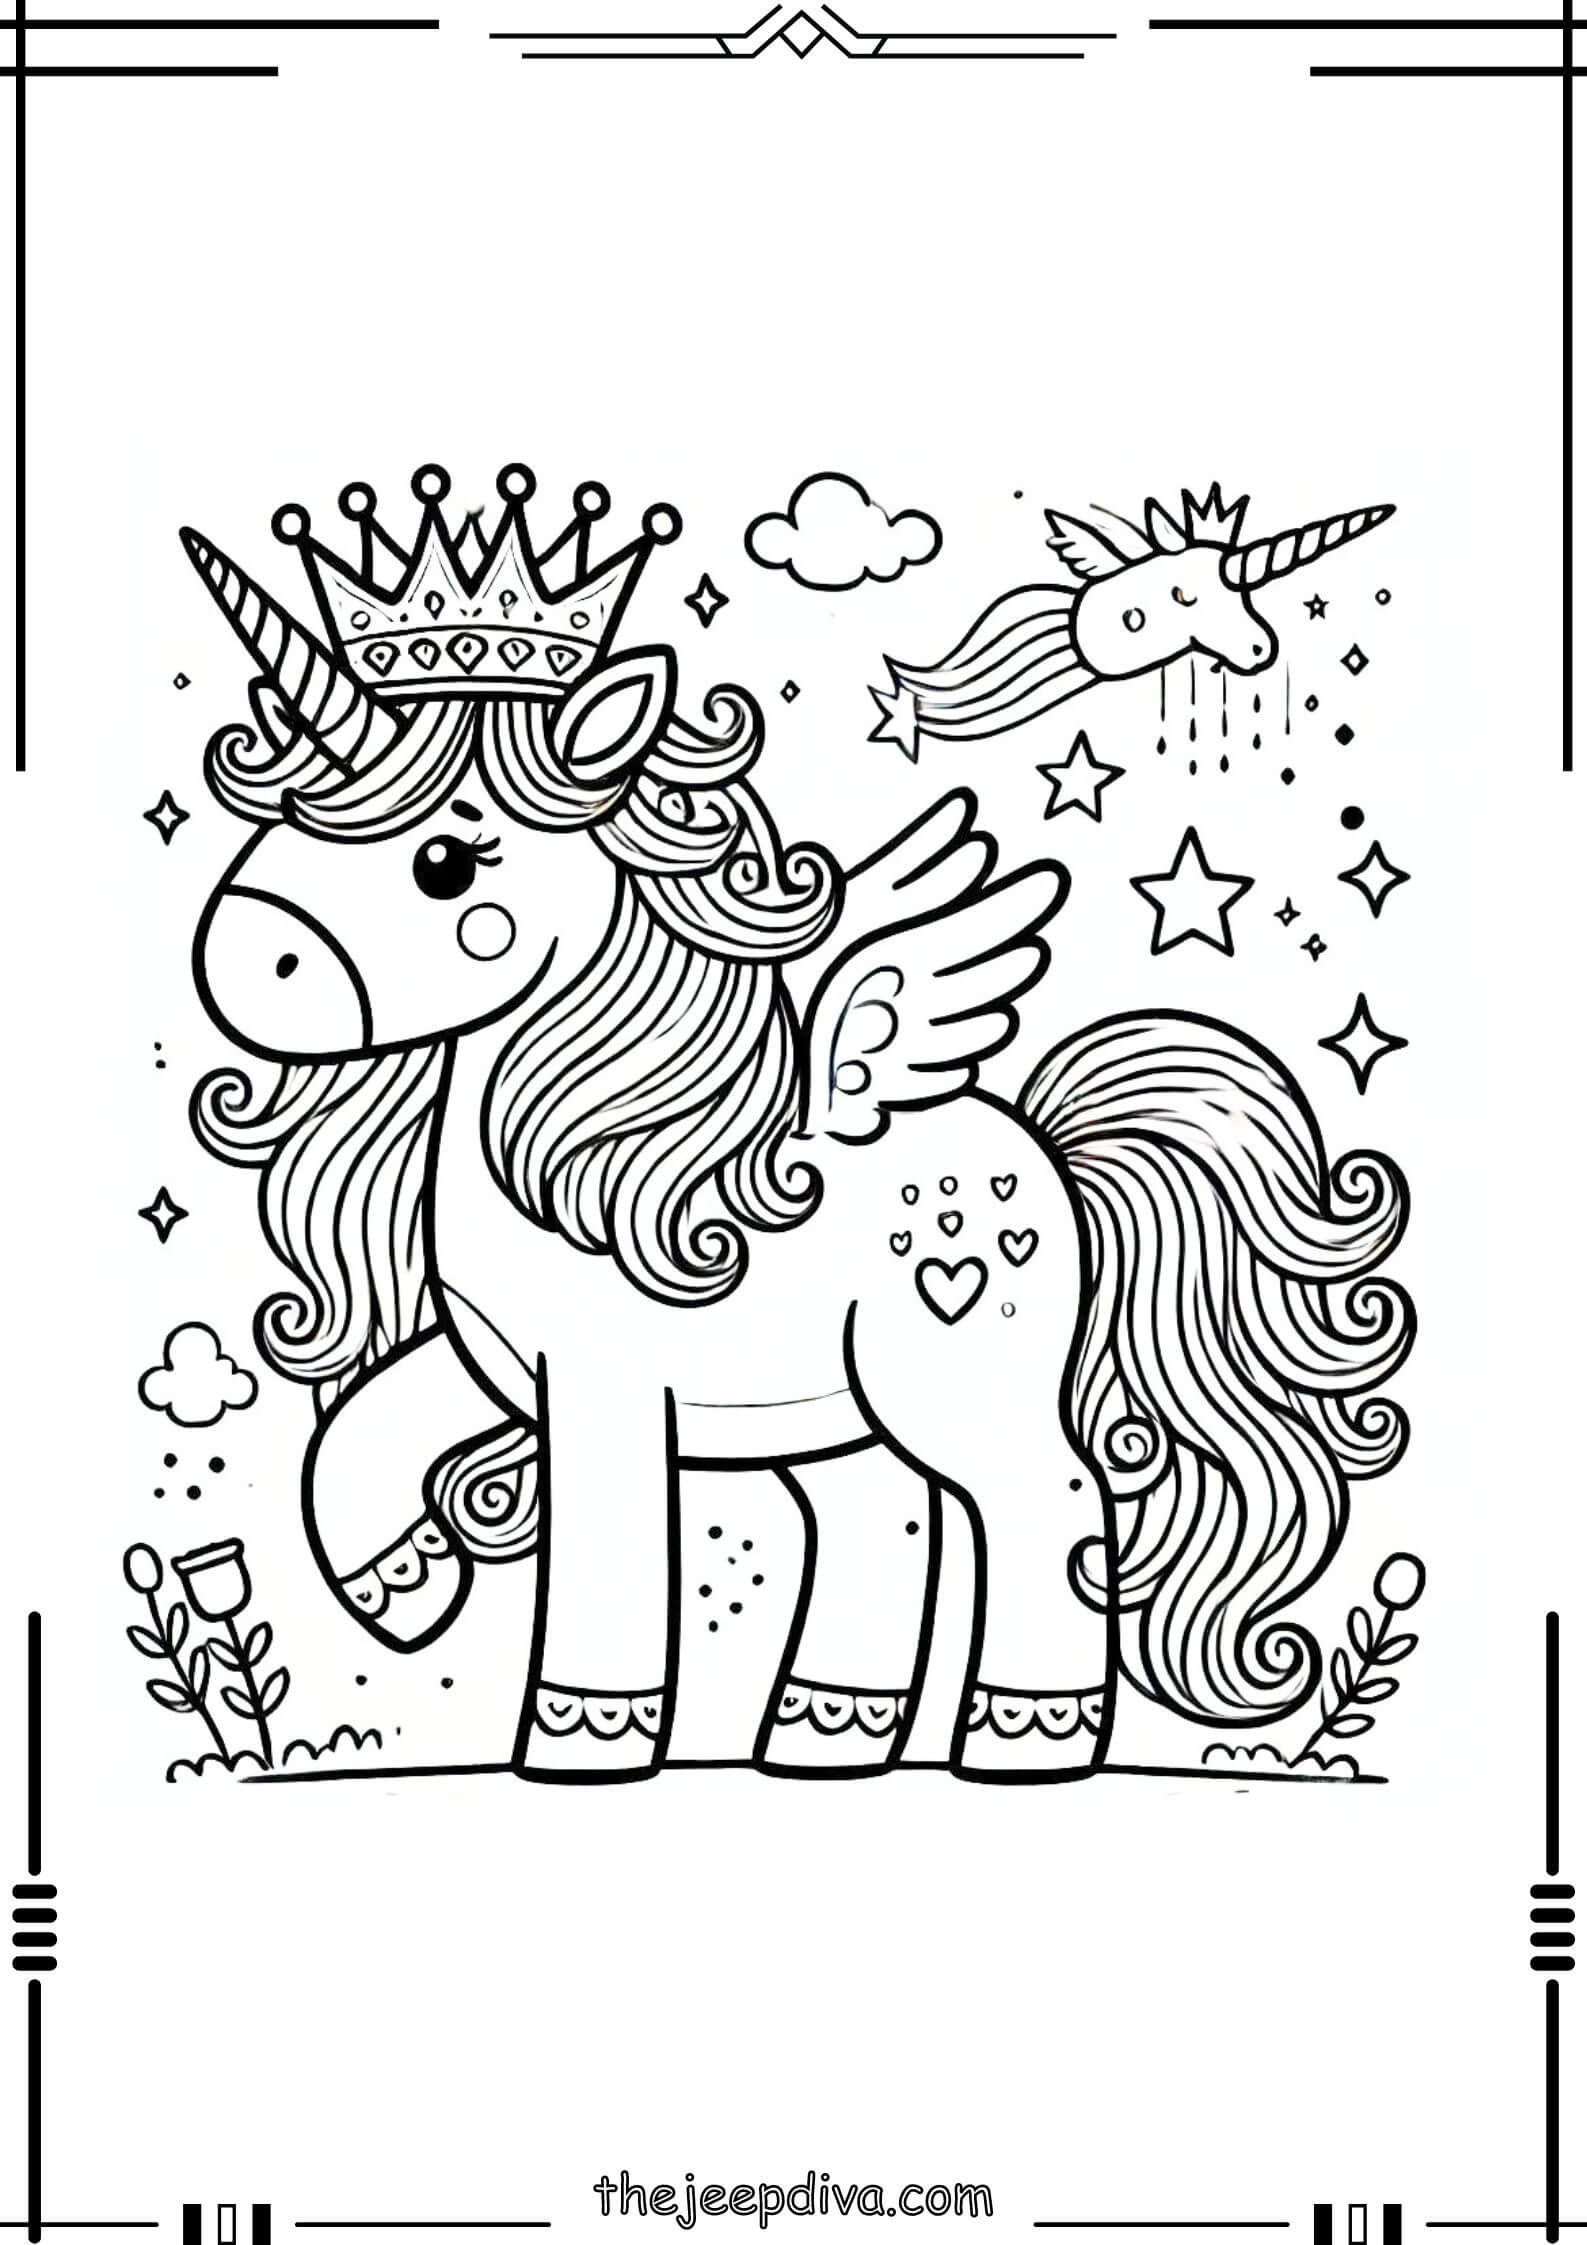 unicorn-coloring-page-medium-10